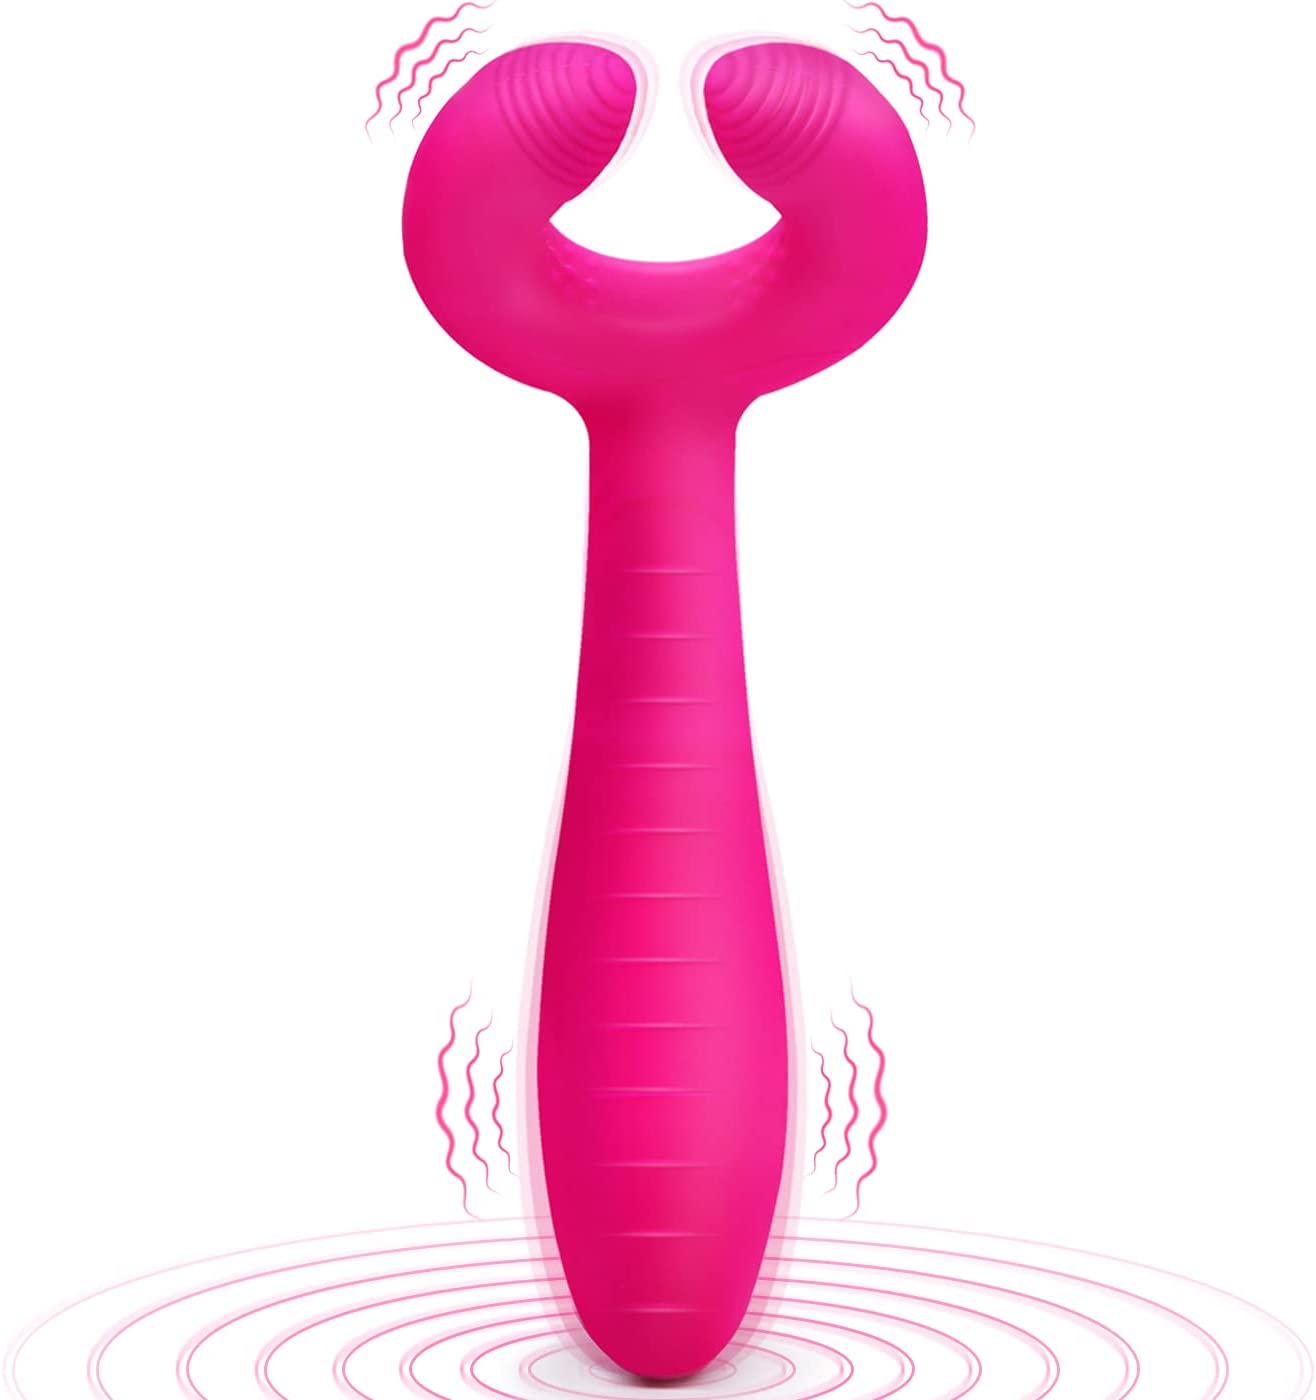 Adorime – G-spot Rabbit Vibrator, Rechargeable Clitoris Massager